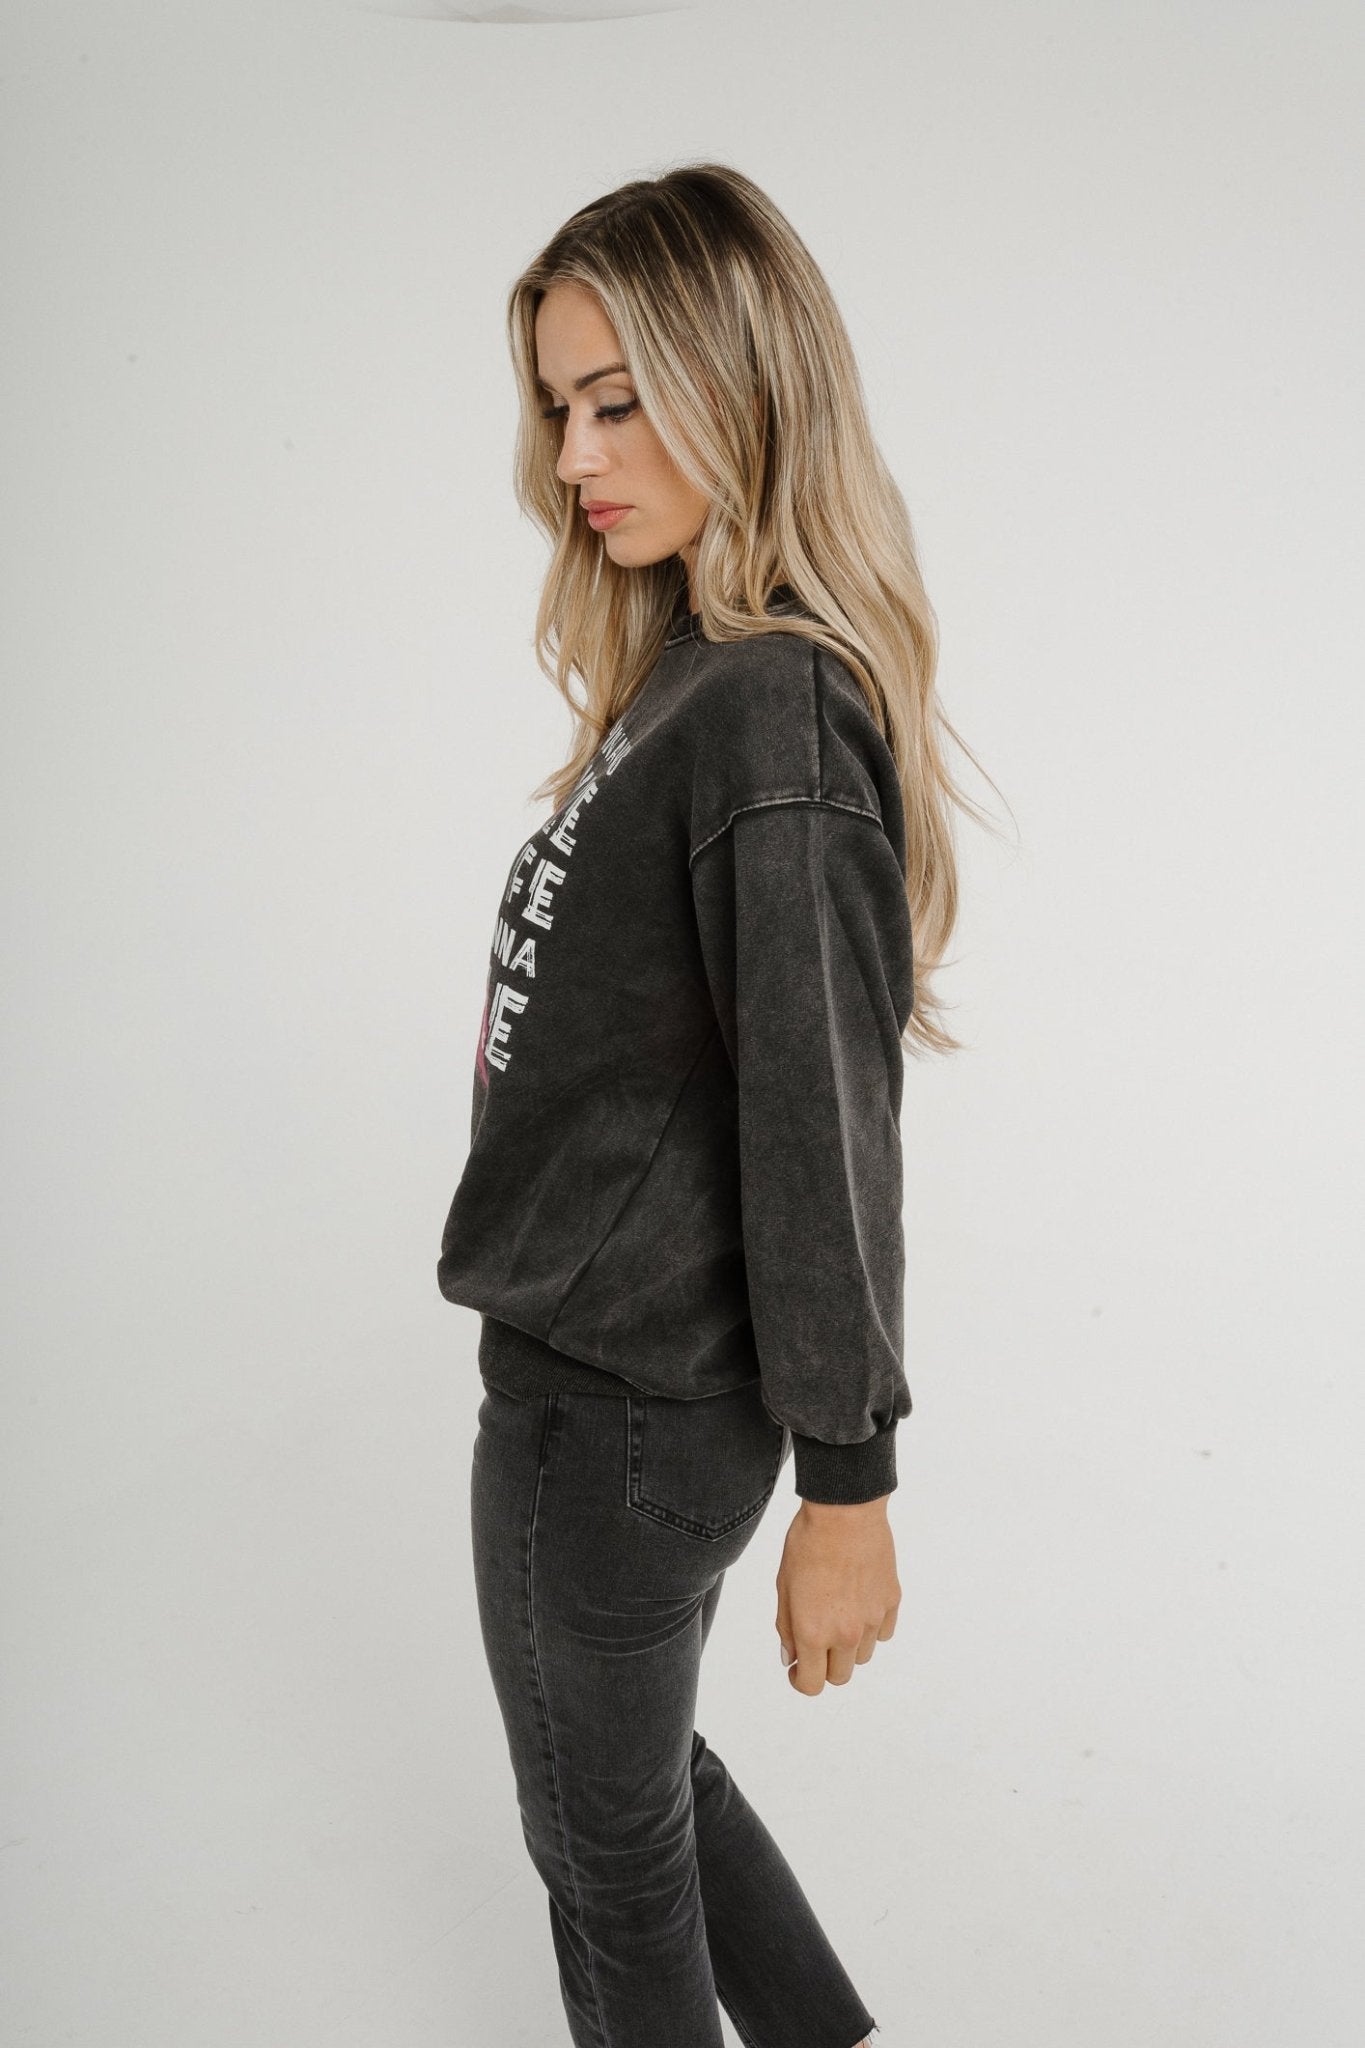 Indie Smiley Face Sweatshirt In Grey - The Walk in Wardrobe